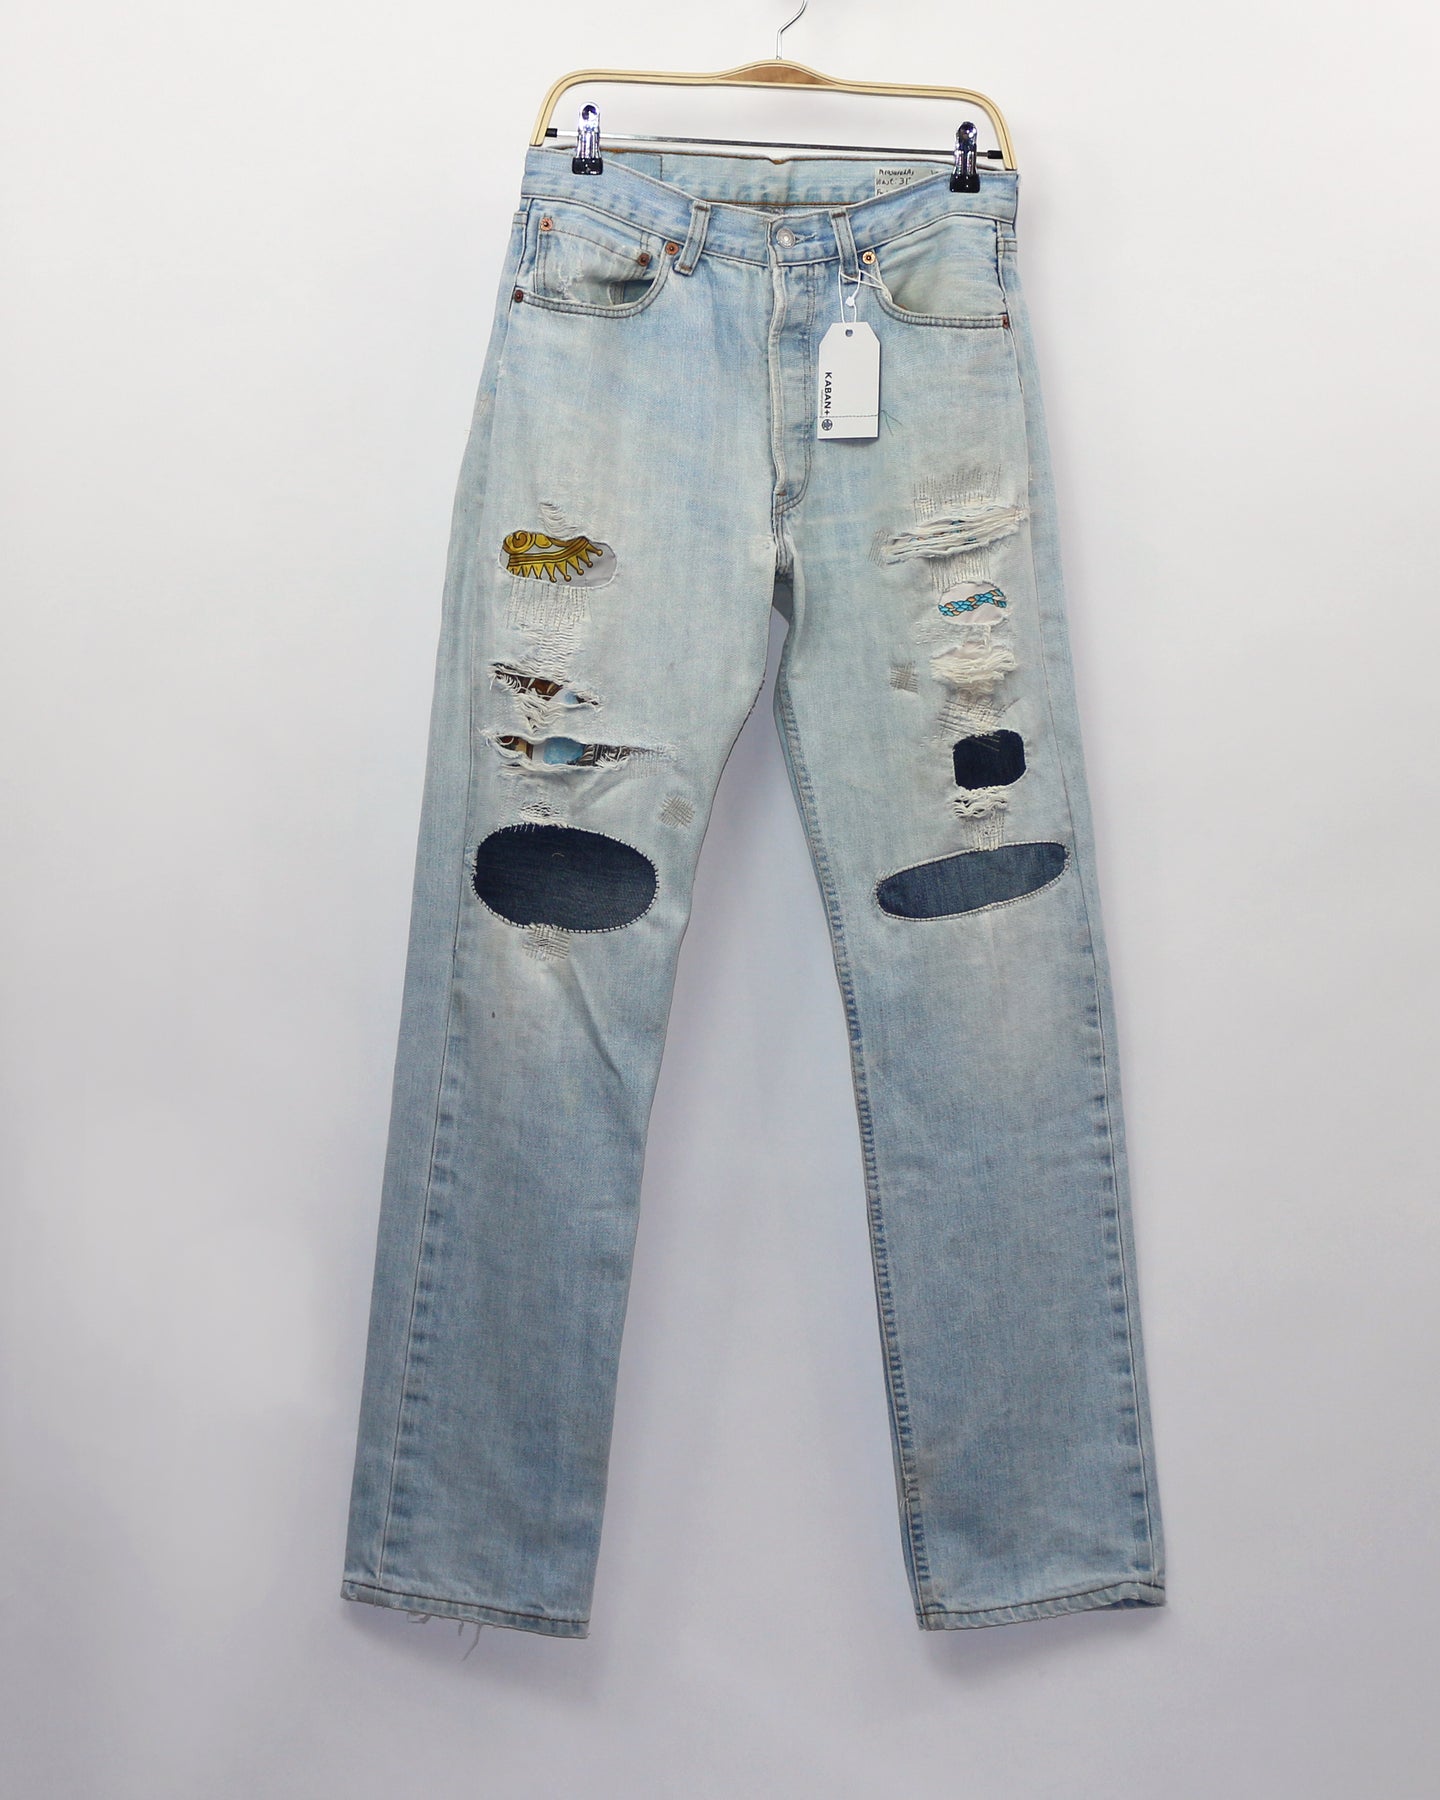 Vintage Levi’s 501, Peek-a-Boo Jeans, fit as women's size 29